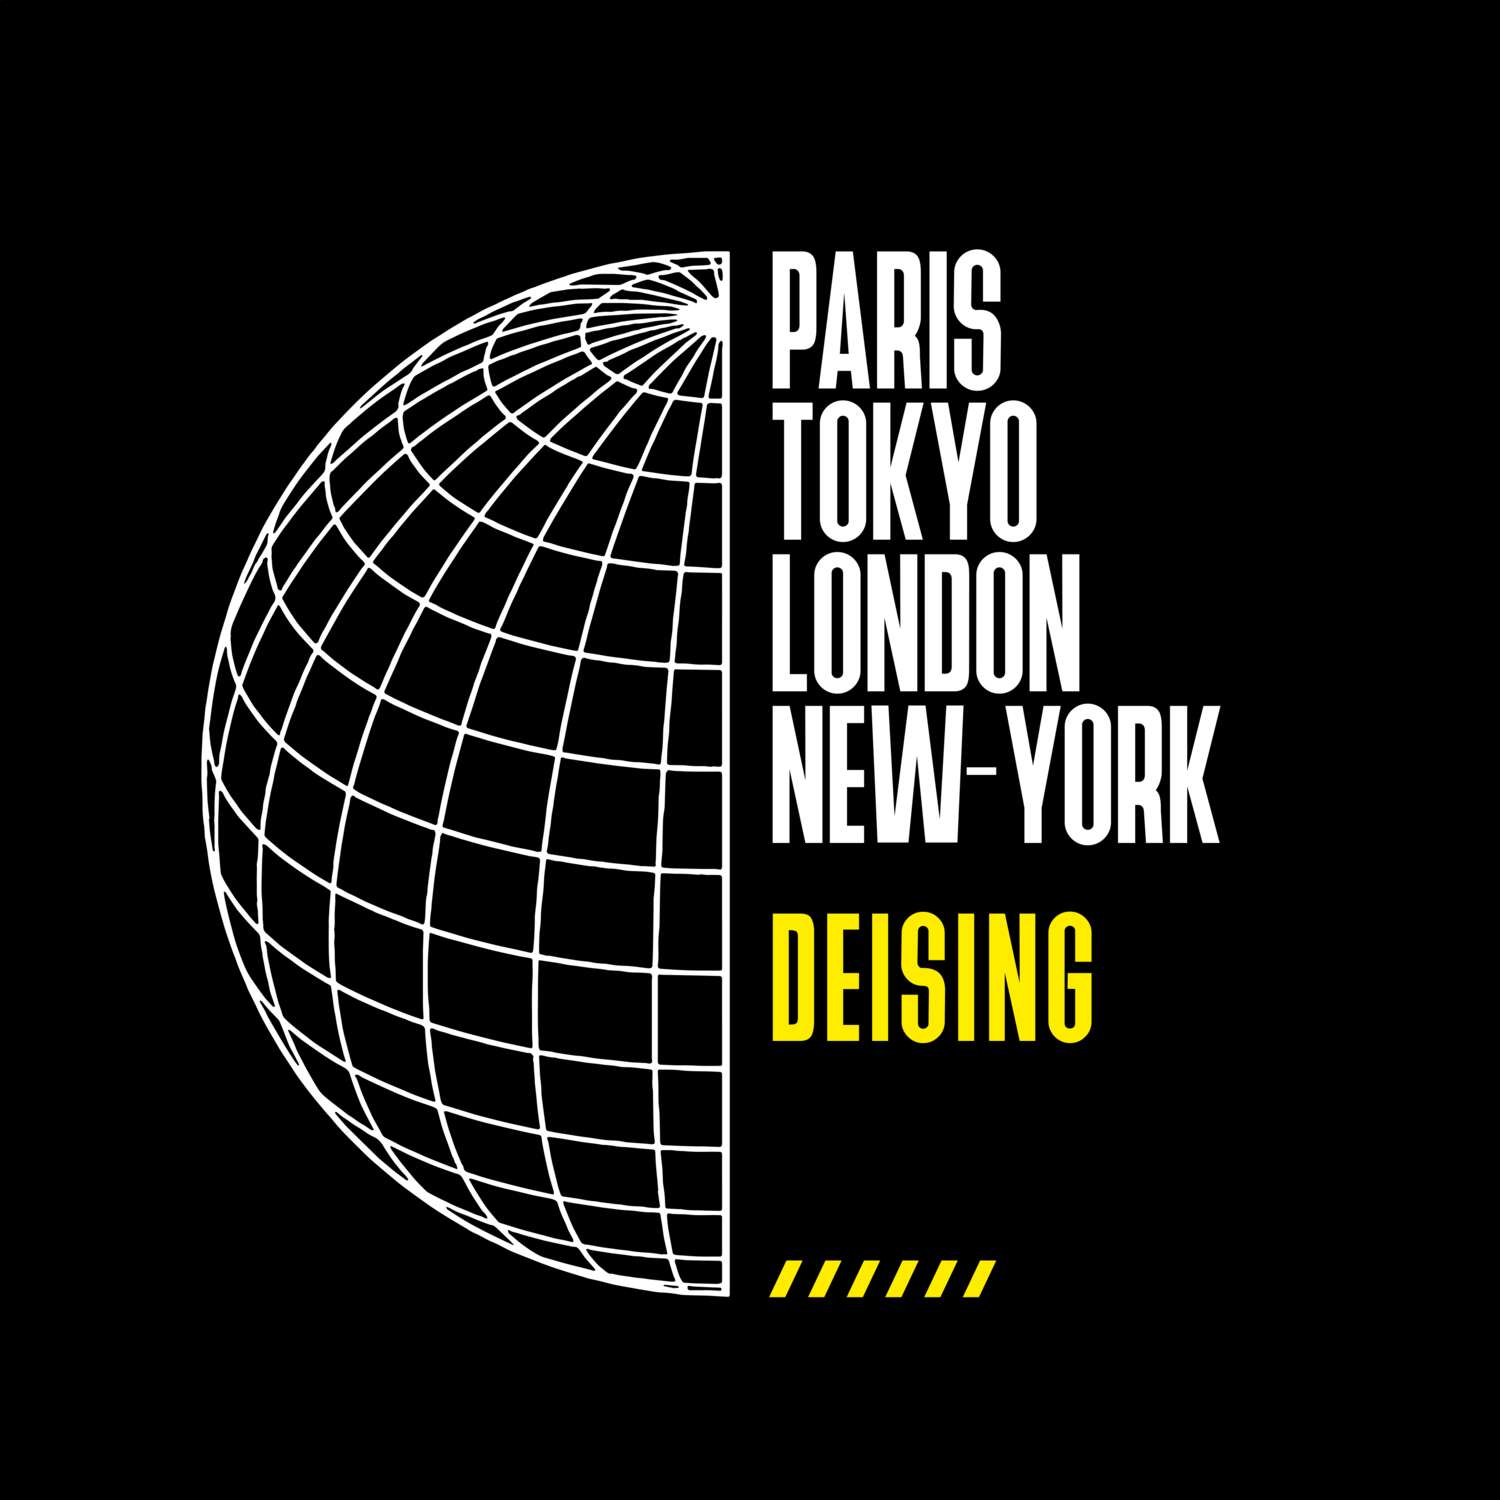 Deising T-Shirt »Paris Tokyo London«